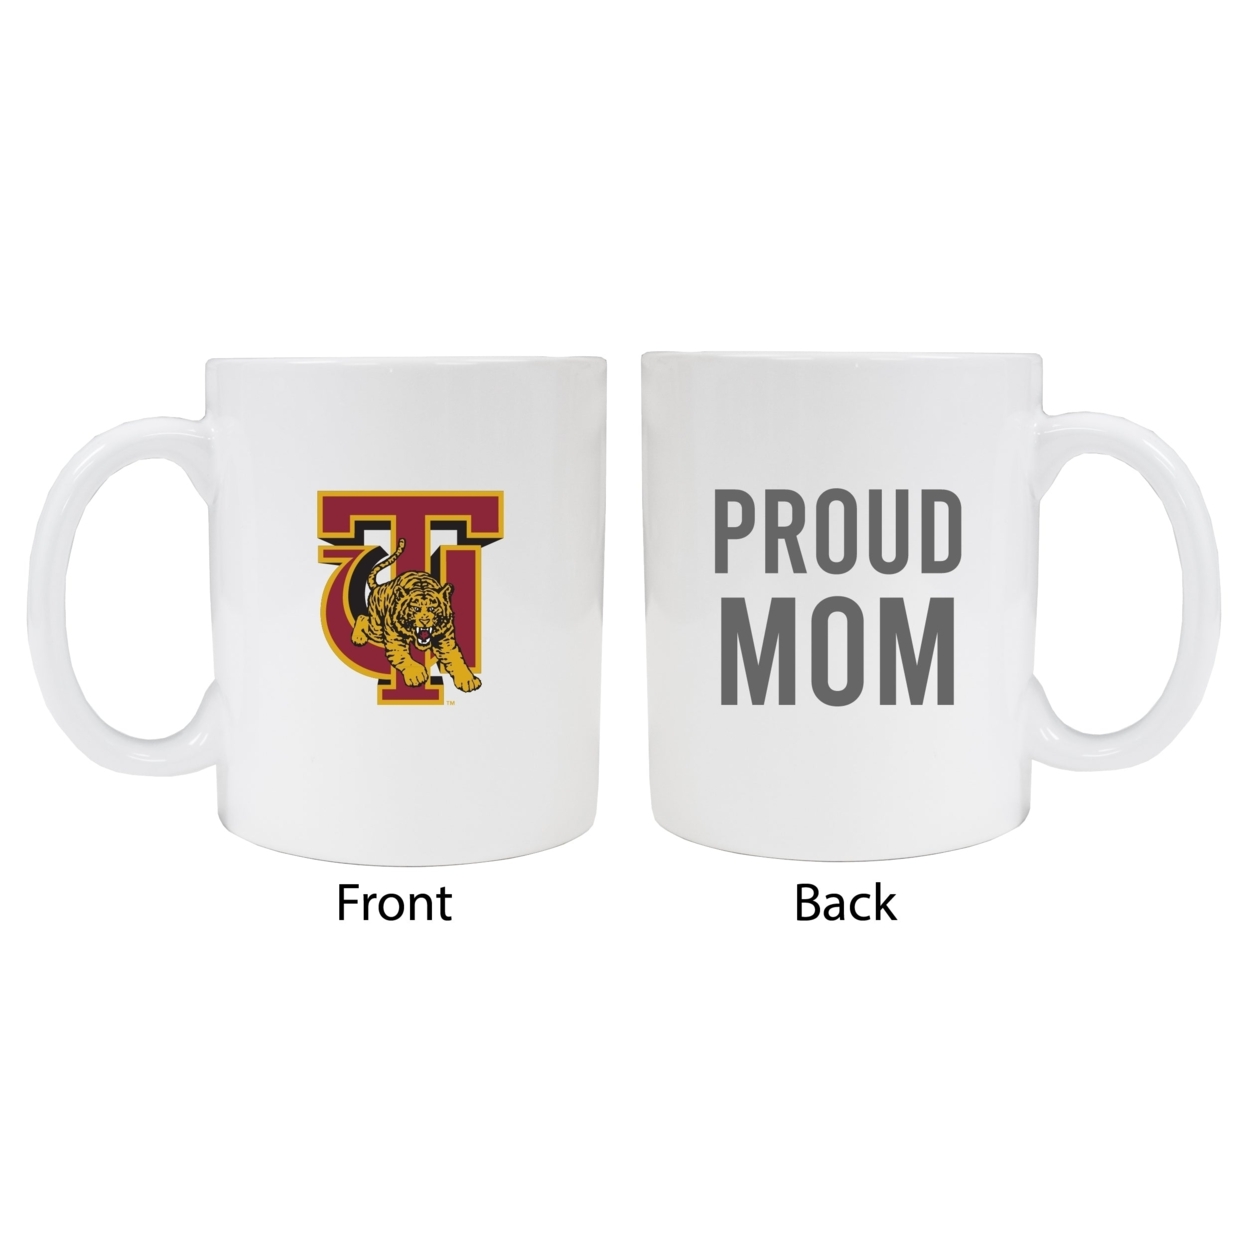 Tuskegee University Proud Mom Ceramic Coffee Mug - White (2 Pack)